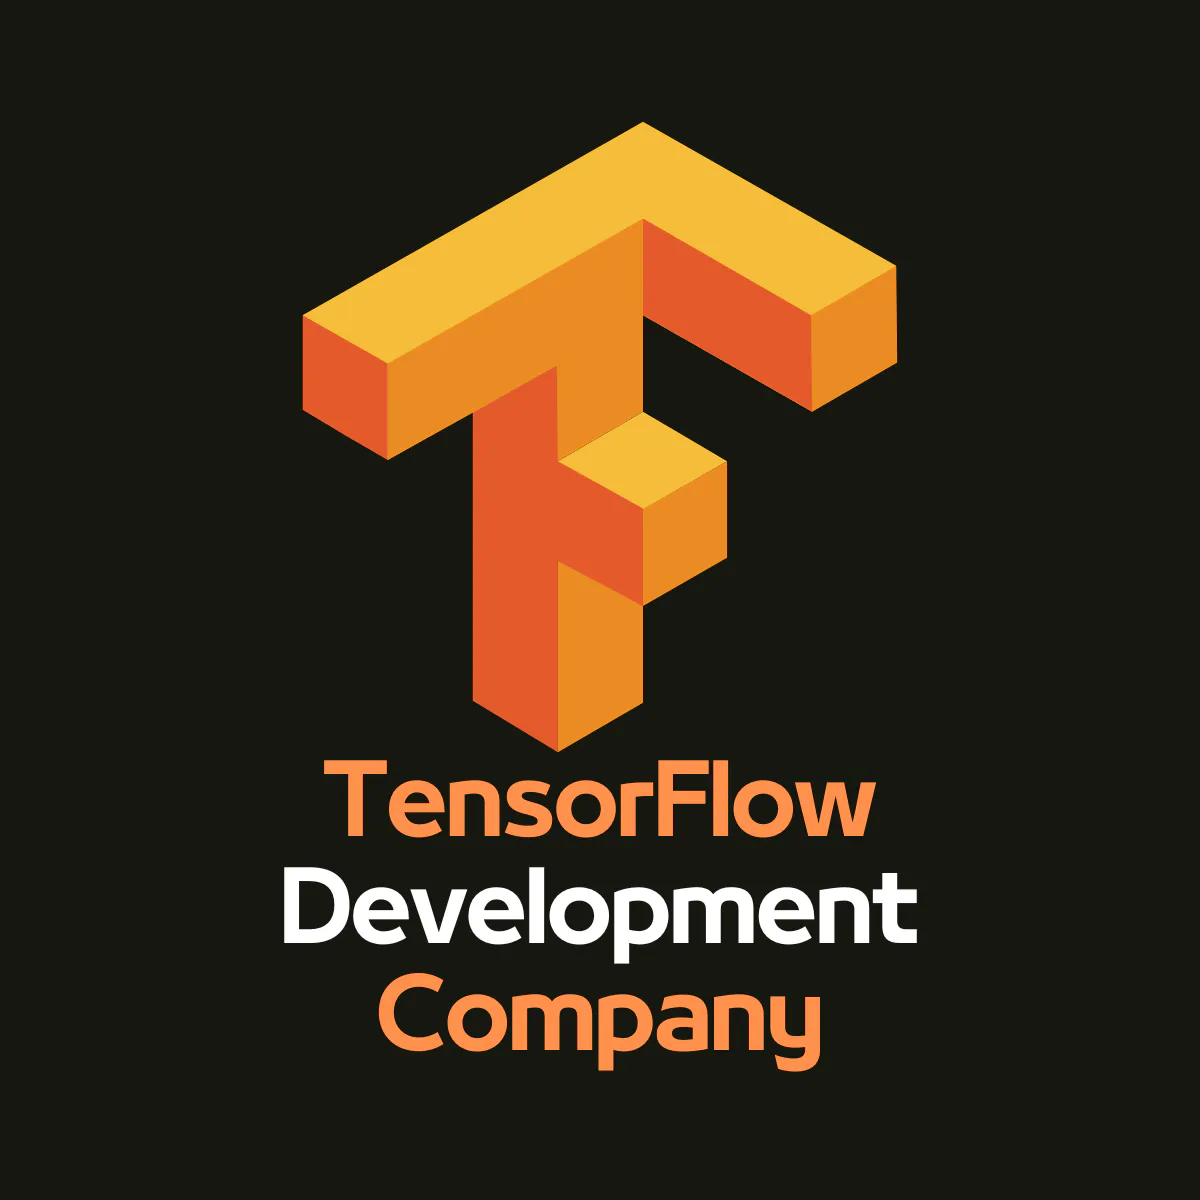 TensorFlow Development